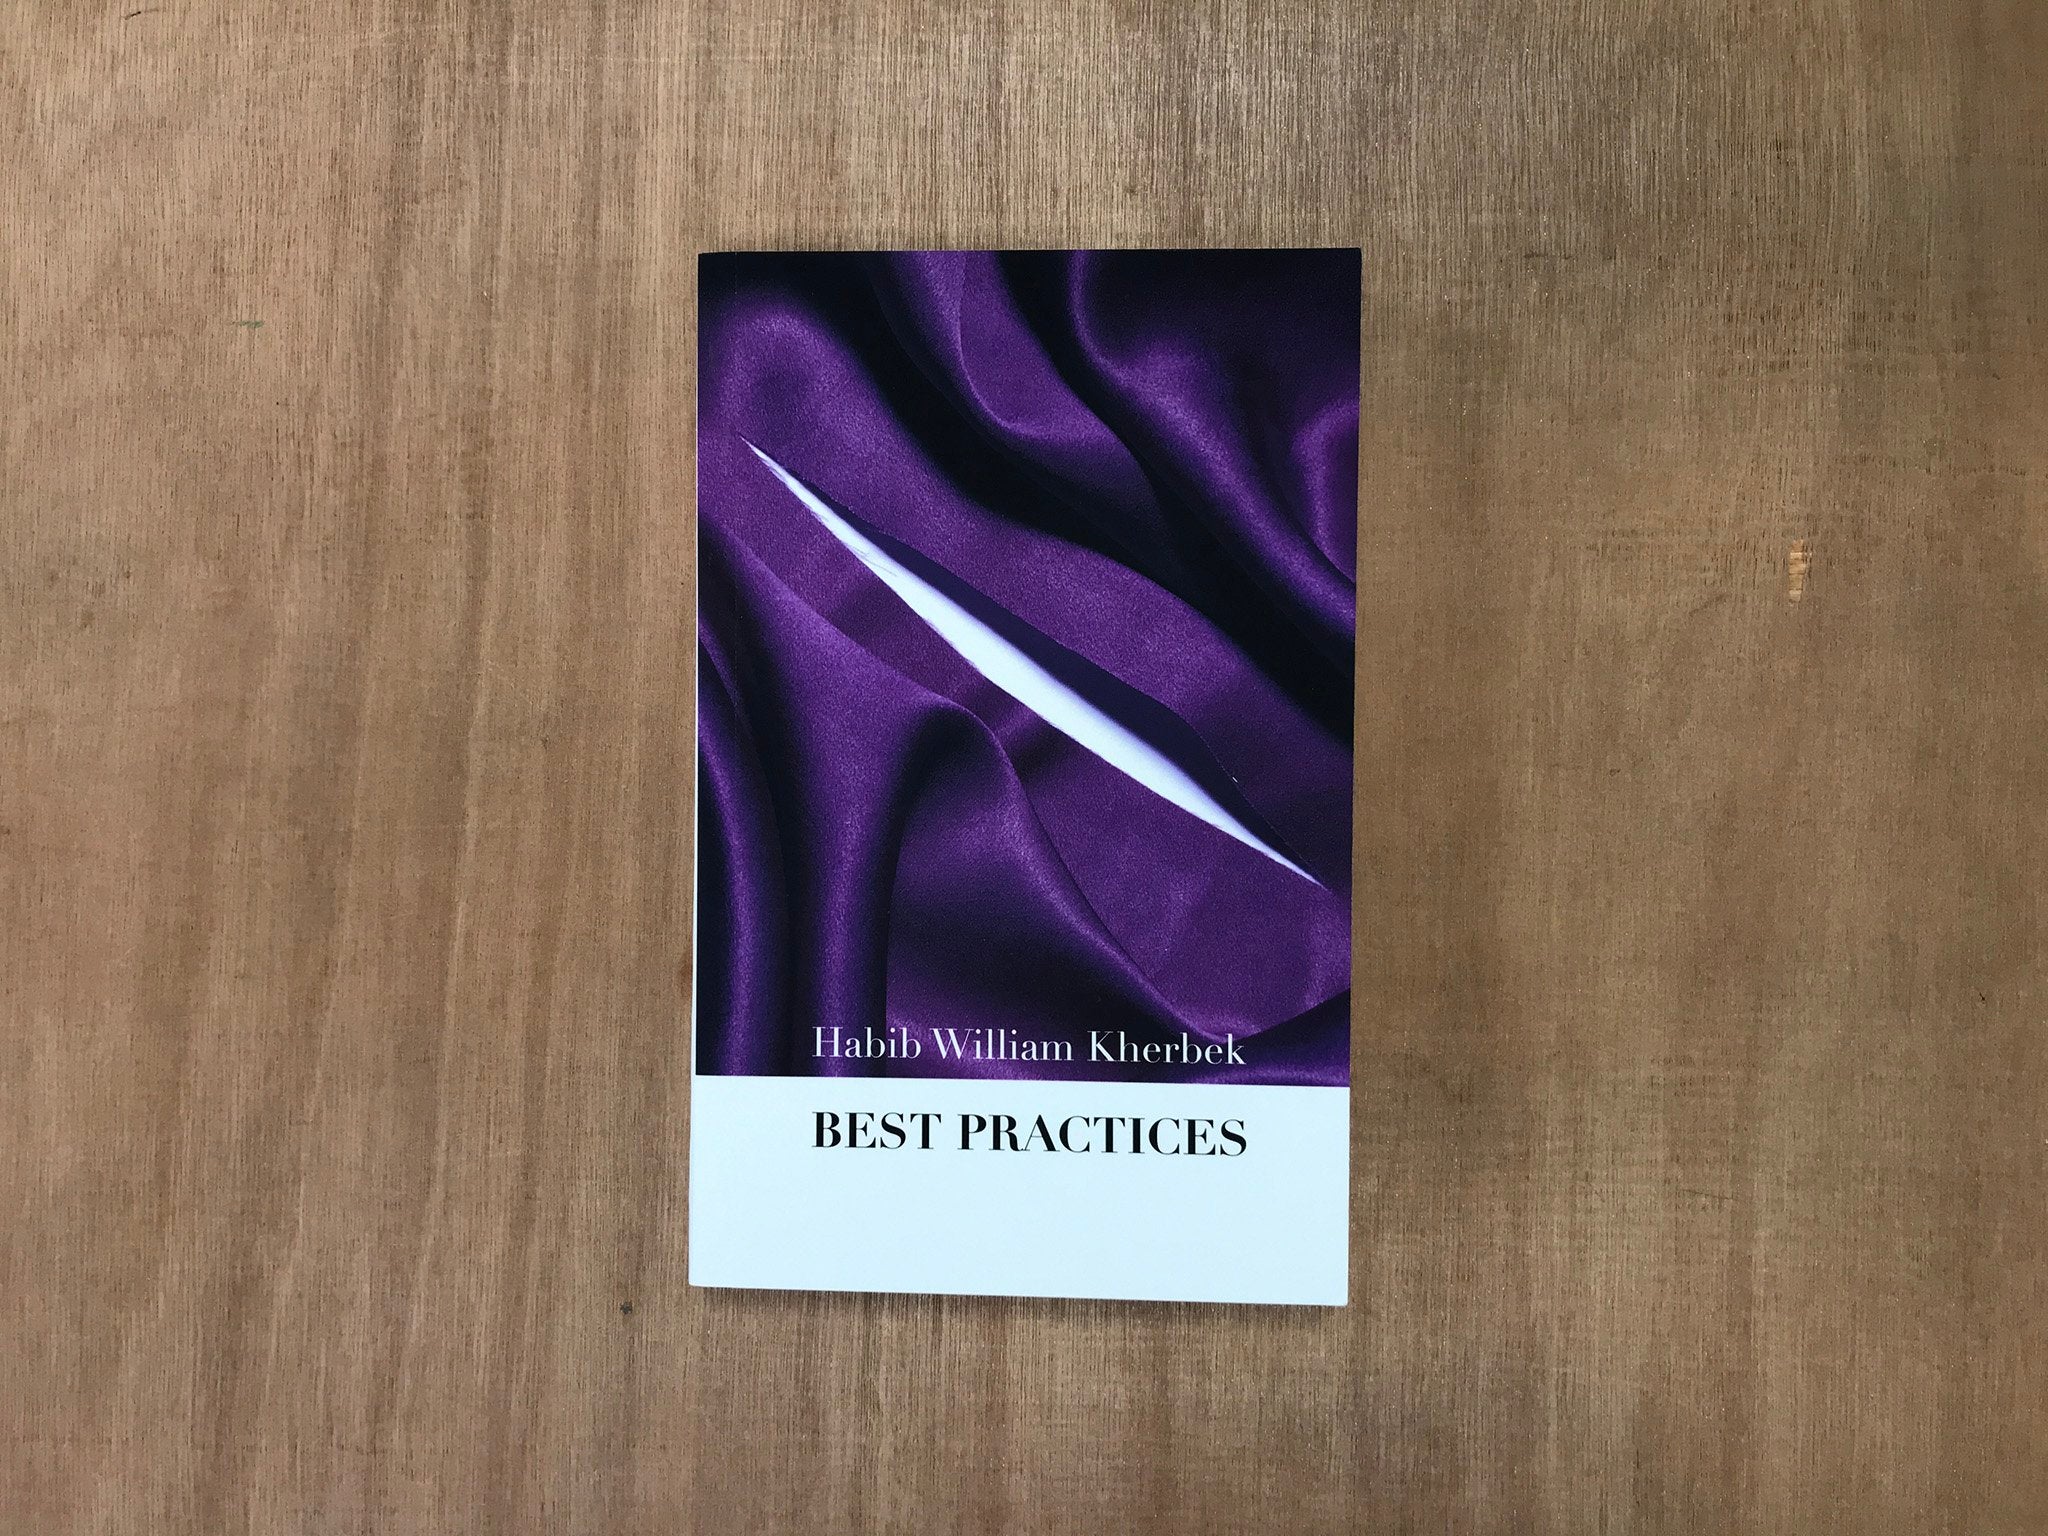 BEST PRACTICES by Habib William Kherbek